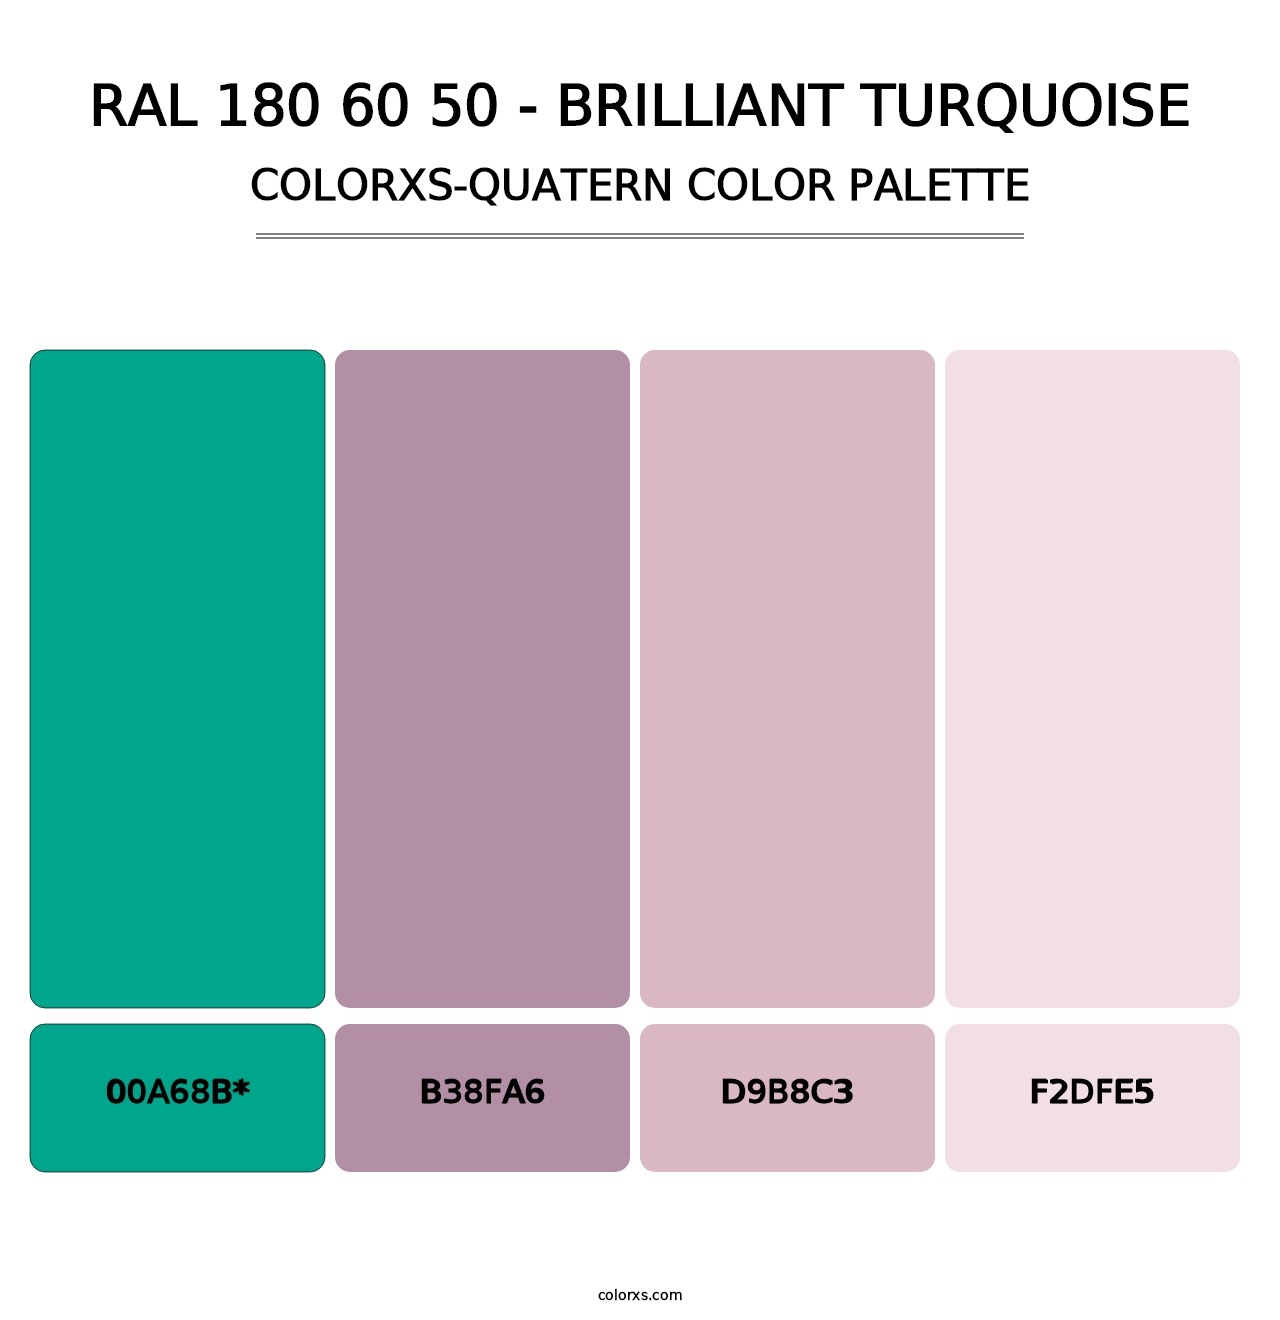 RAL 180 60 50 - Brilliant Turquoise - Colorxs Quatern Palette